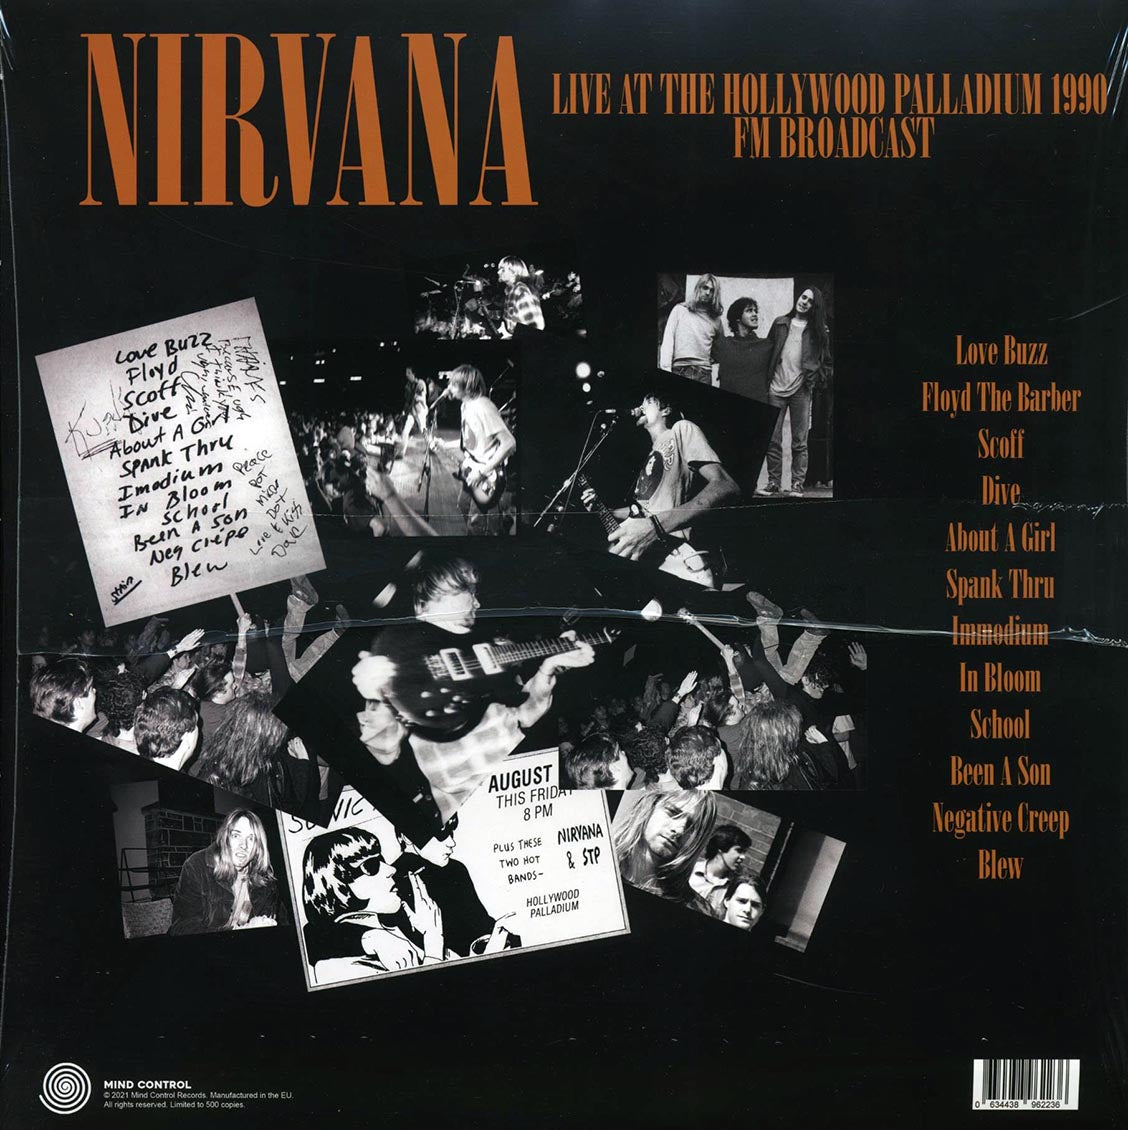 Nirvana - California Uber Alles: Live At The Hollywood Palladium 1990 FM Broadcast (ltd. 500 copies made) - Vinyl LP, LP